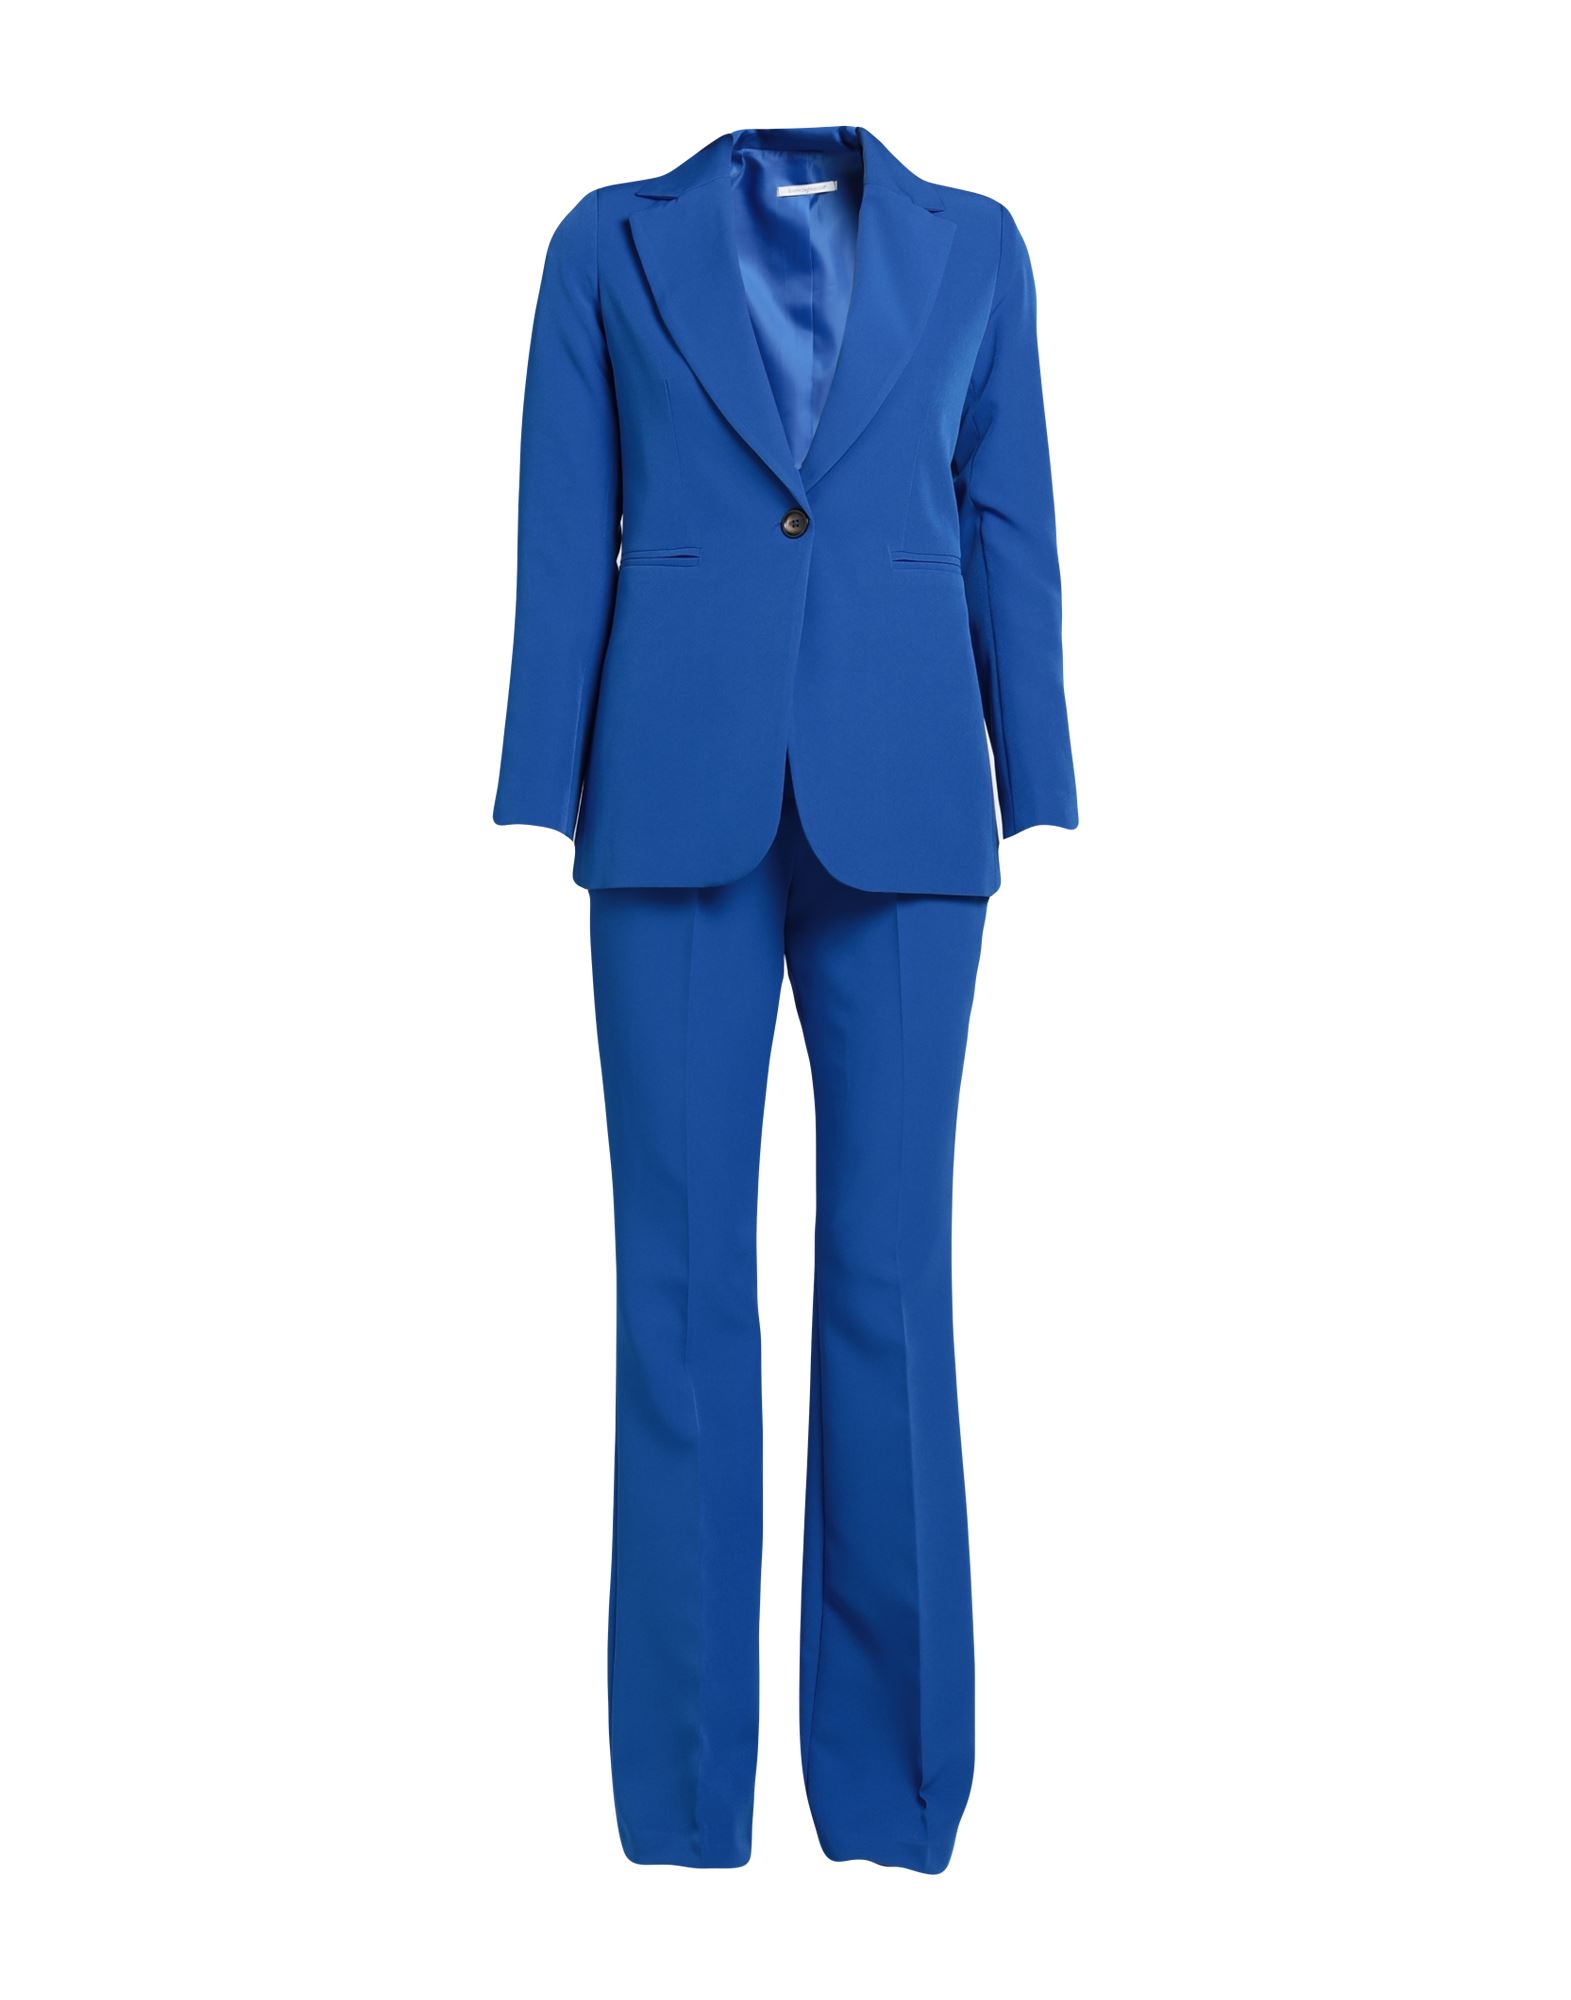 Biancoghiaccio Suits In Blue